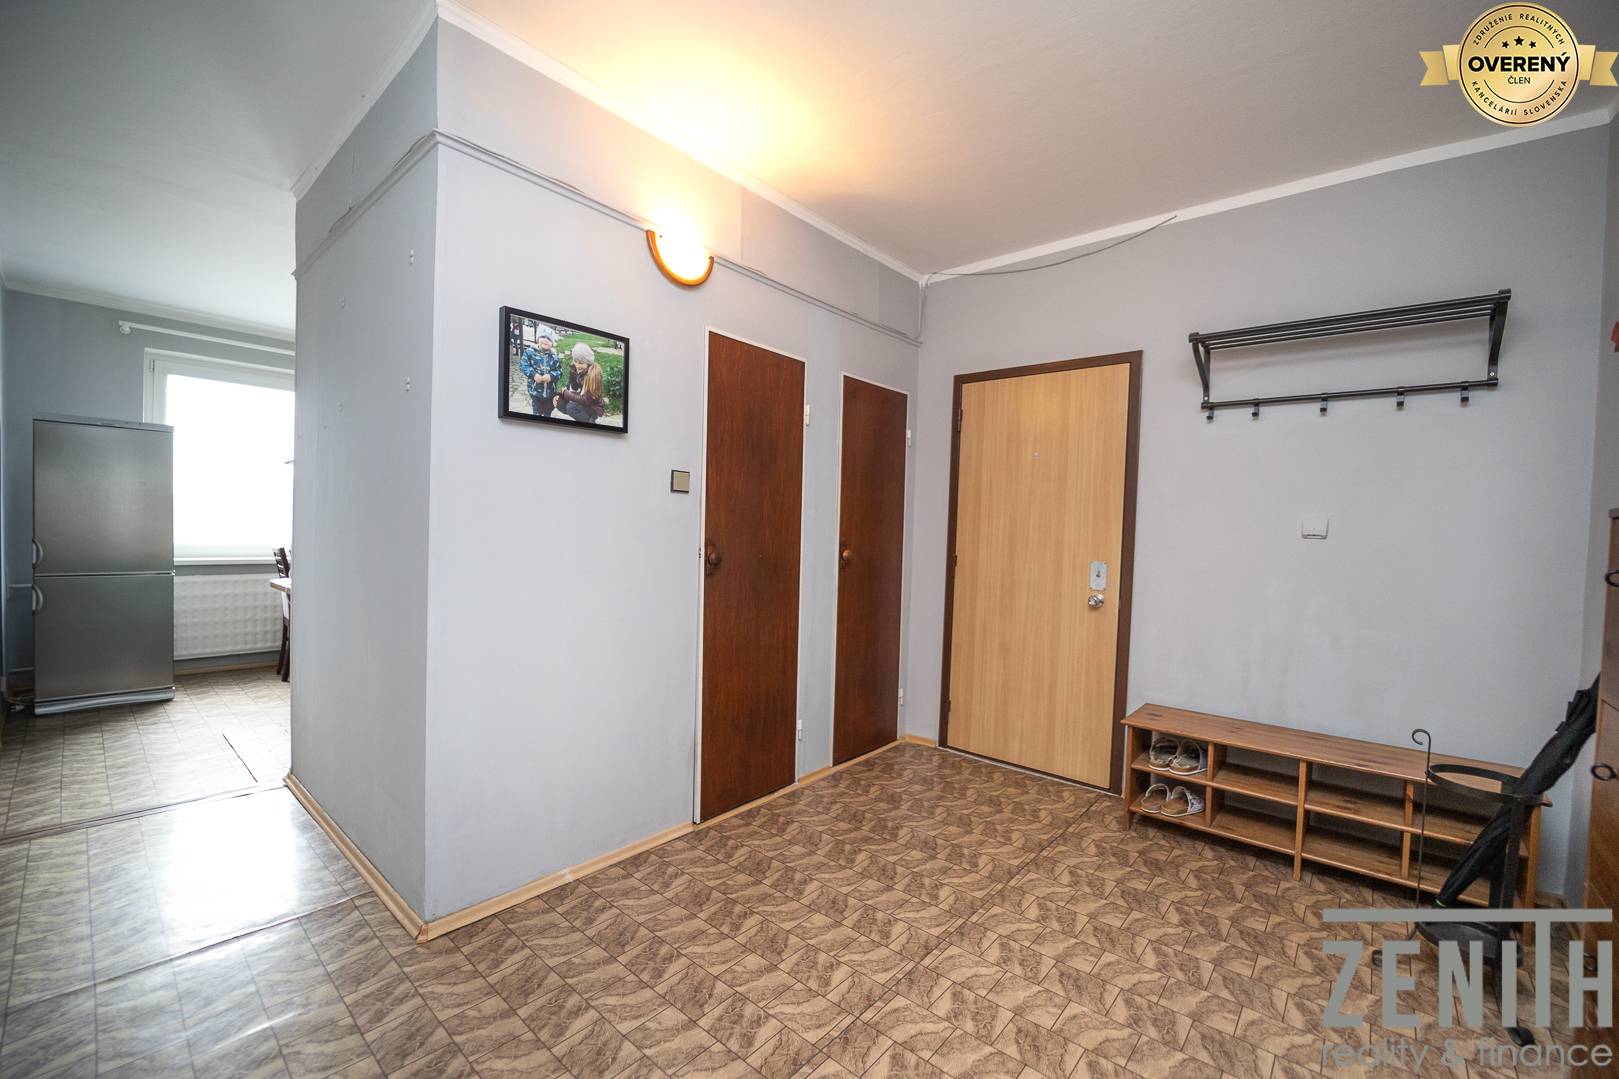 Two bedroom apartment, Centrum 2, Sale, Ilava, Slovakia